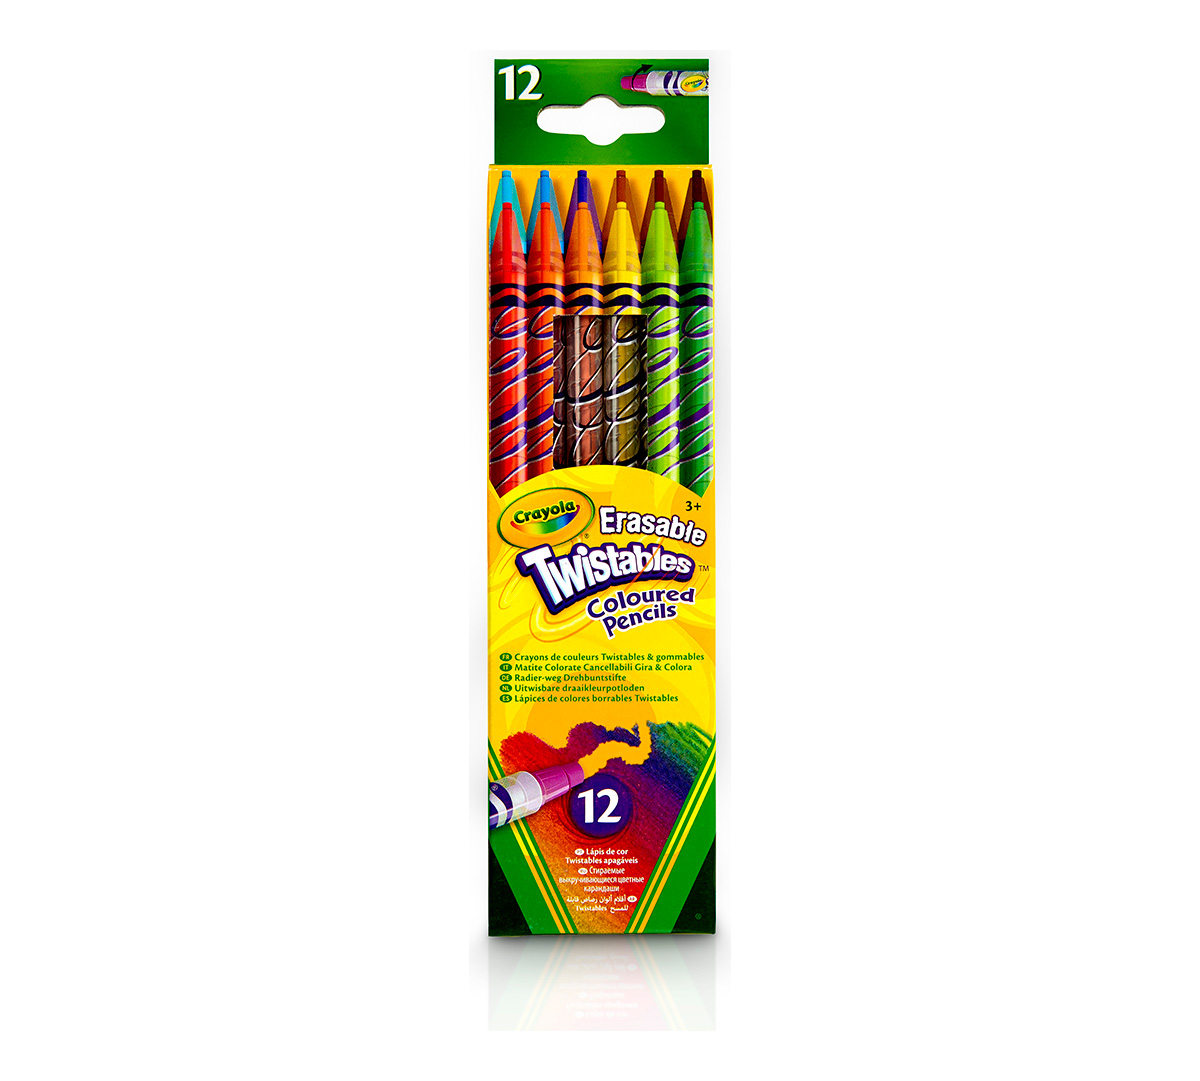 https://shop.crayola.com/on/demandware.static/-/Sites-crayola-storefront/default/dw2abaceba/images/68-7508-E_Product_Twistables_Pencils_Eraseable_12ct_F.jpg